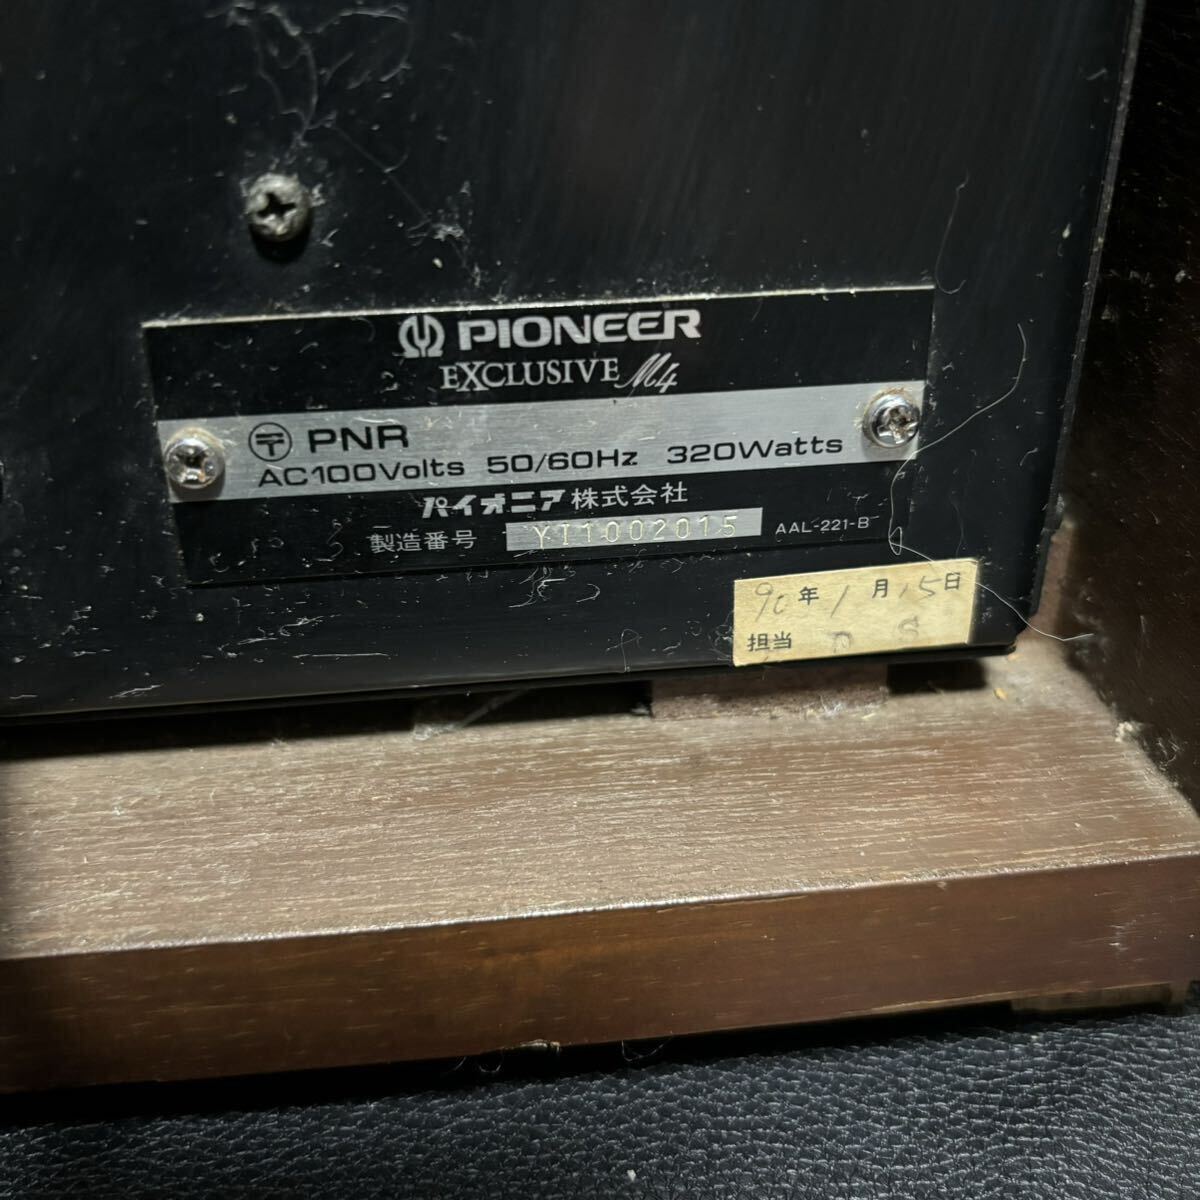 PIONEER ( Pioneer )EXCLUSIVE M4 stereo power amplifier / exclusive 